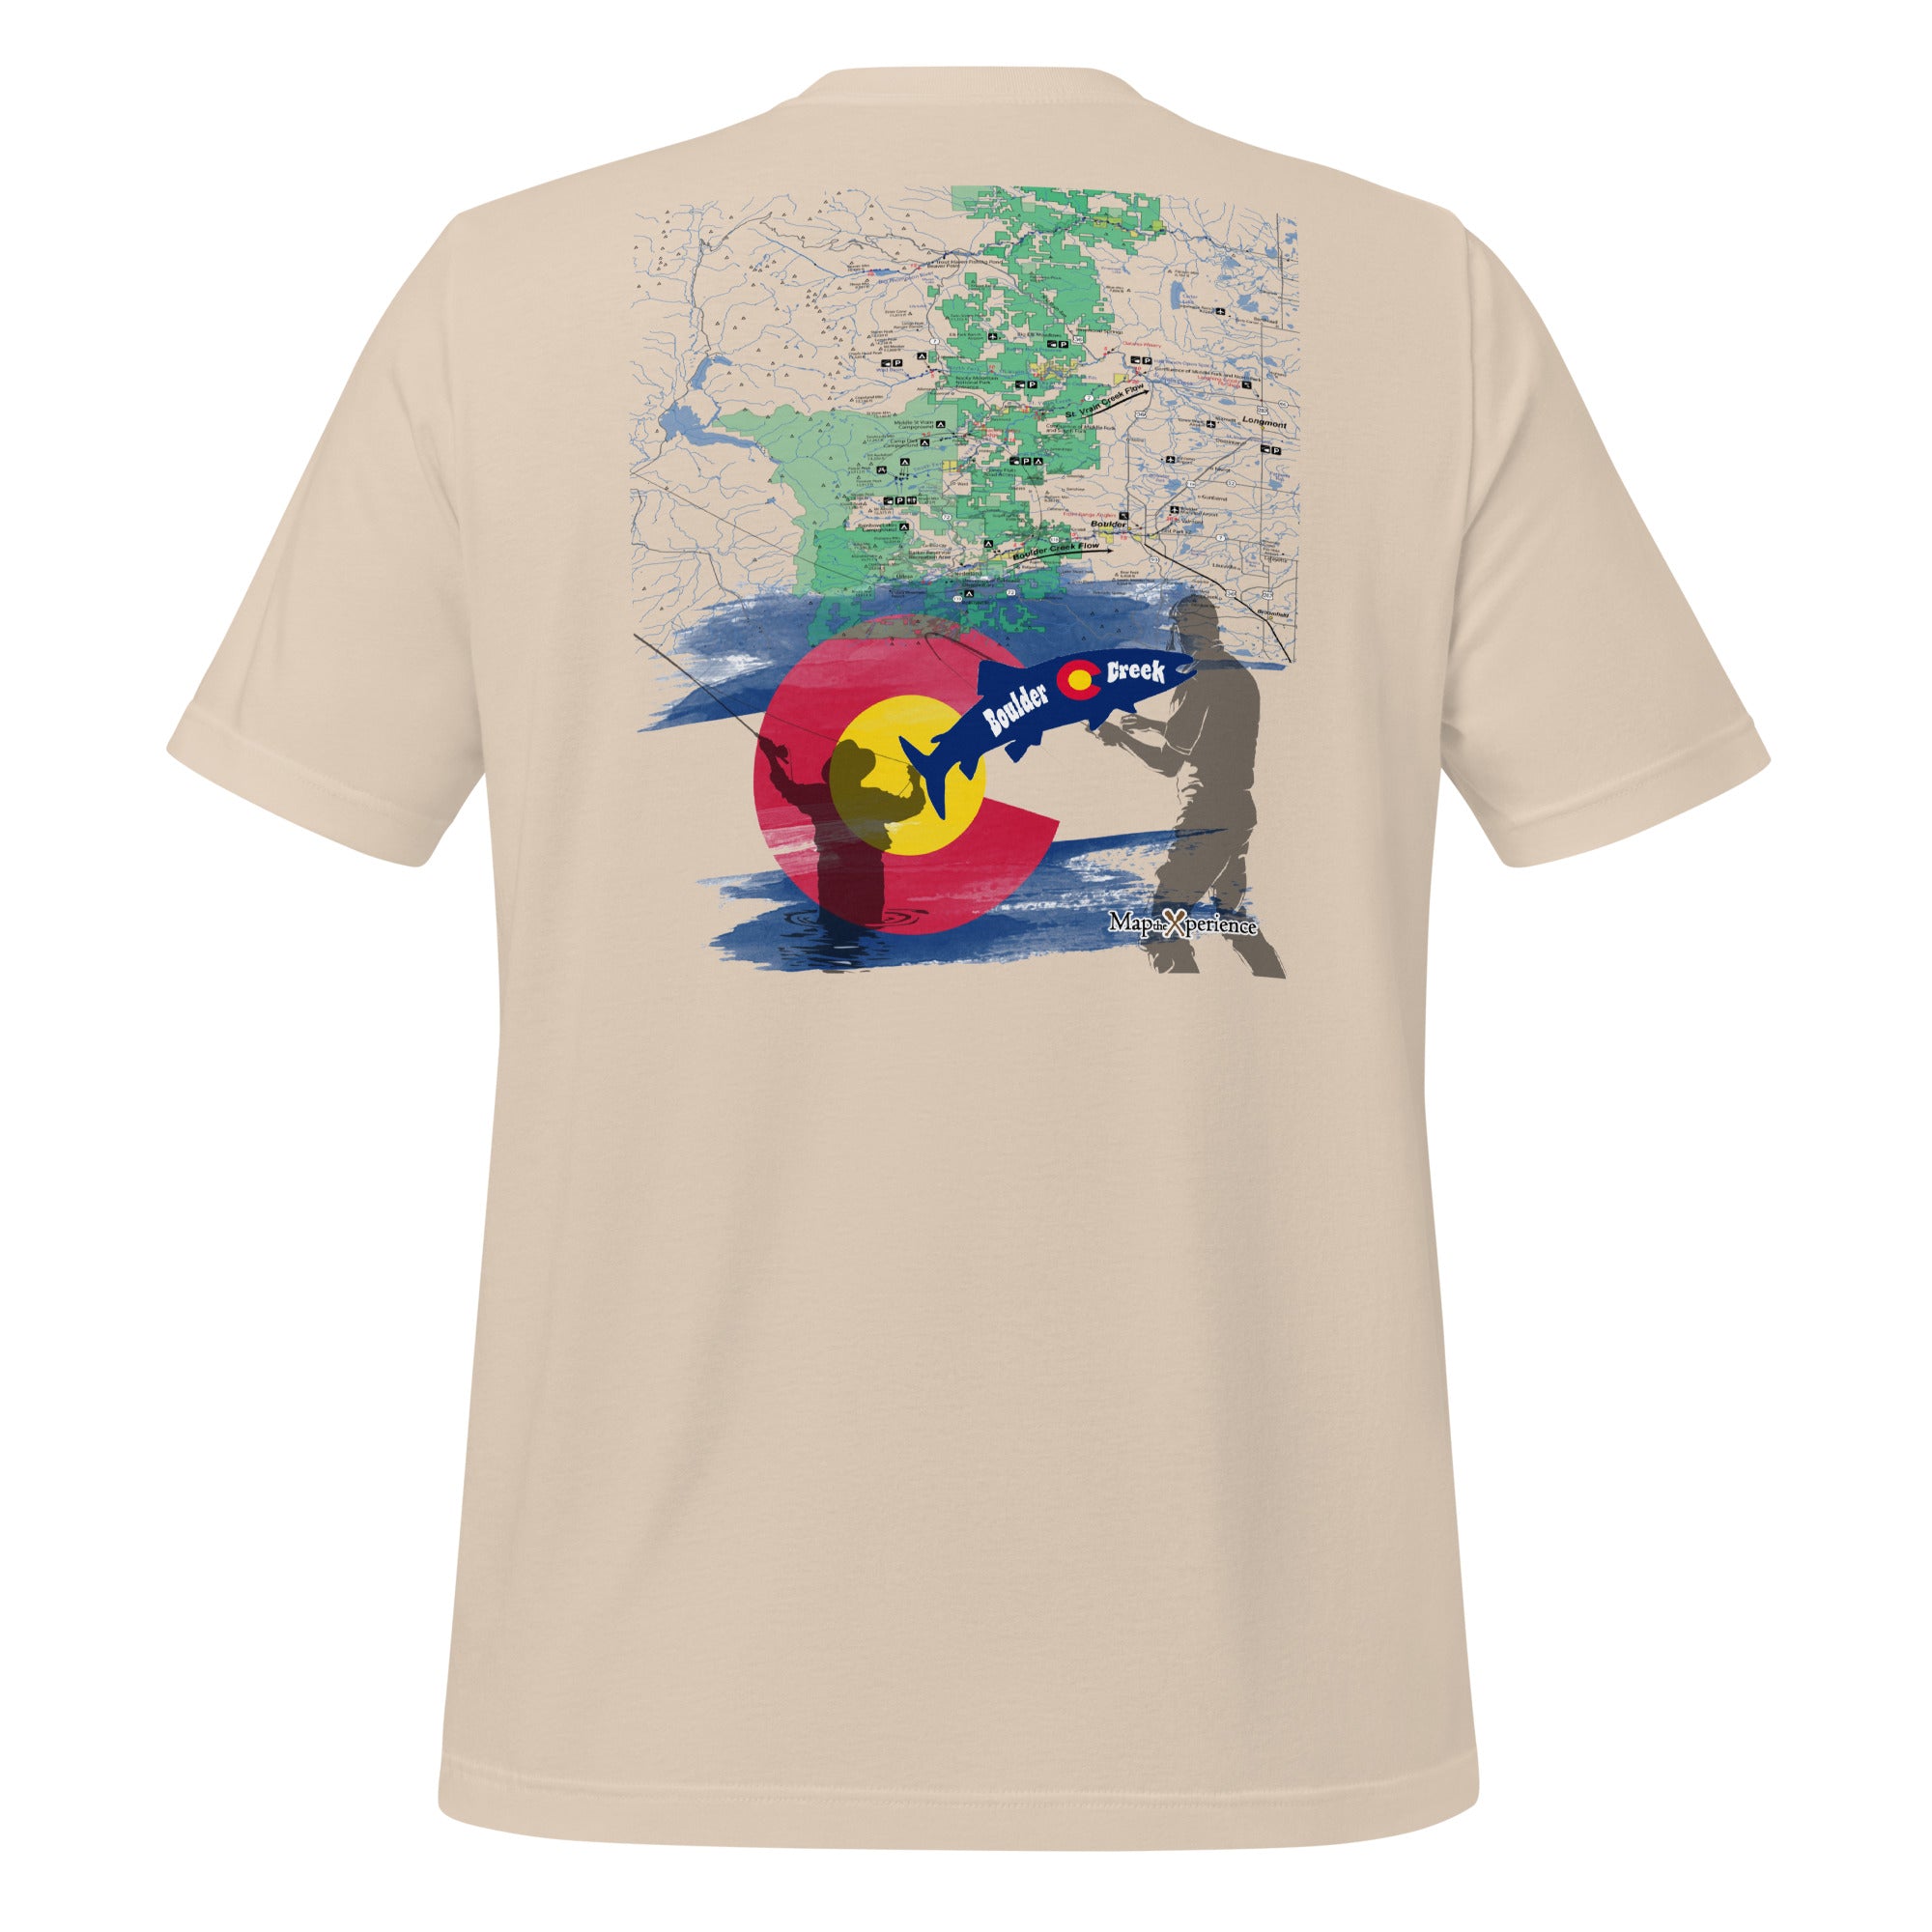 Boulder Creek, Colorado Performance t-shirt